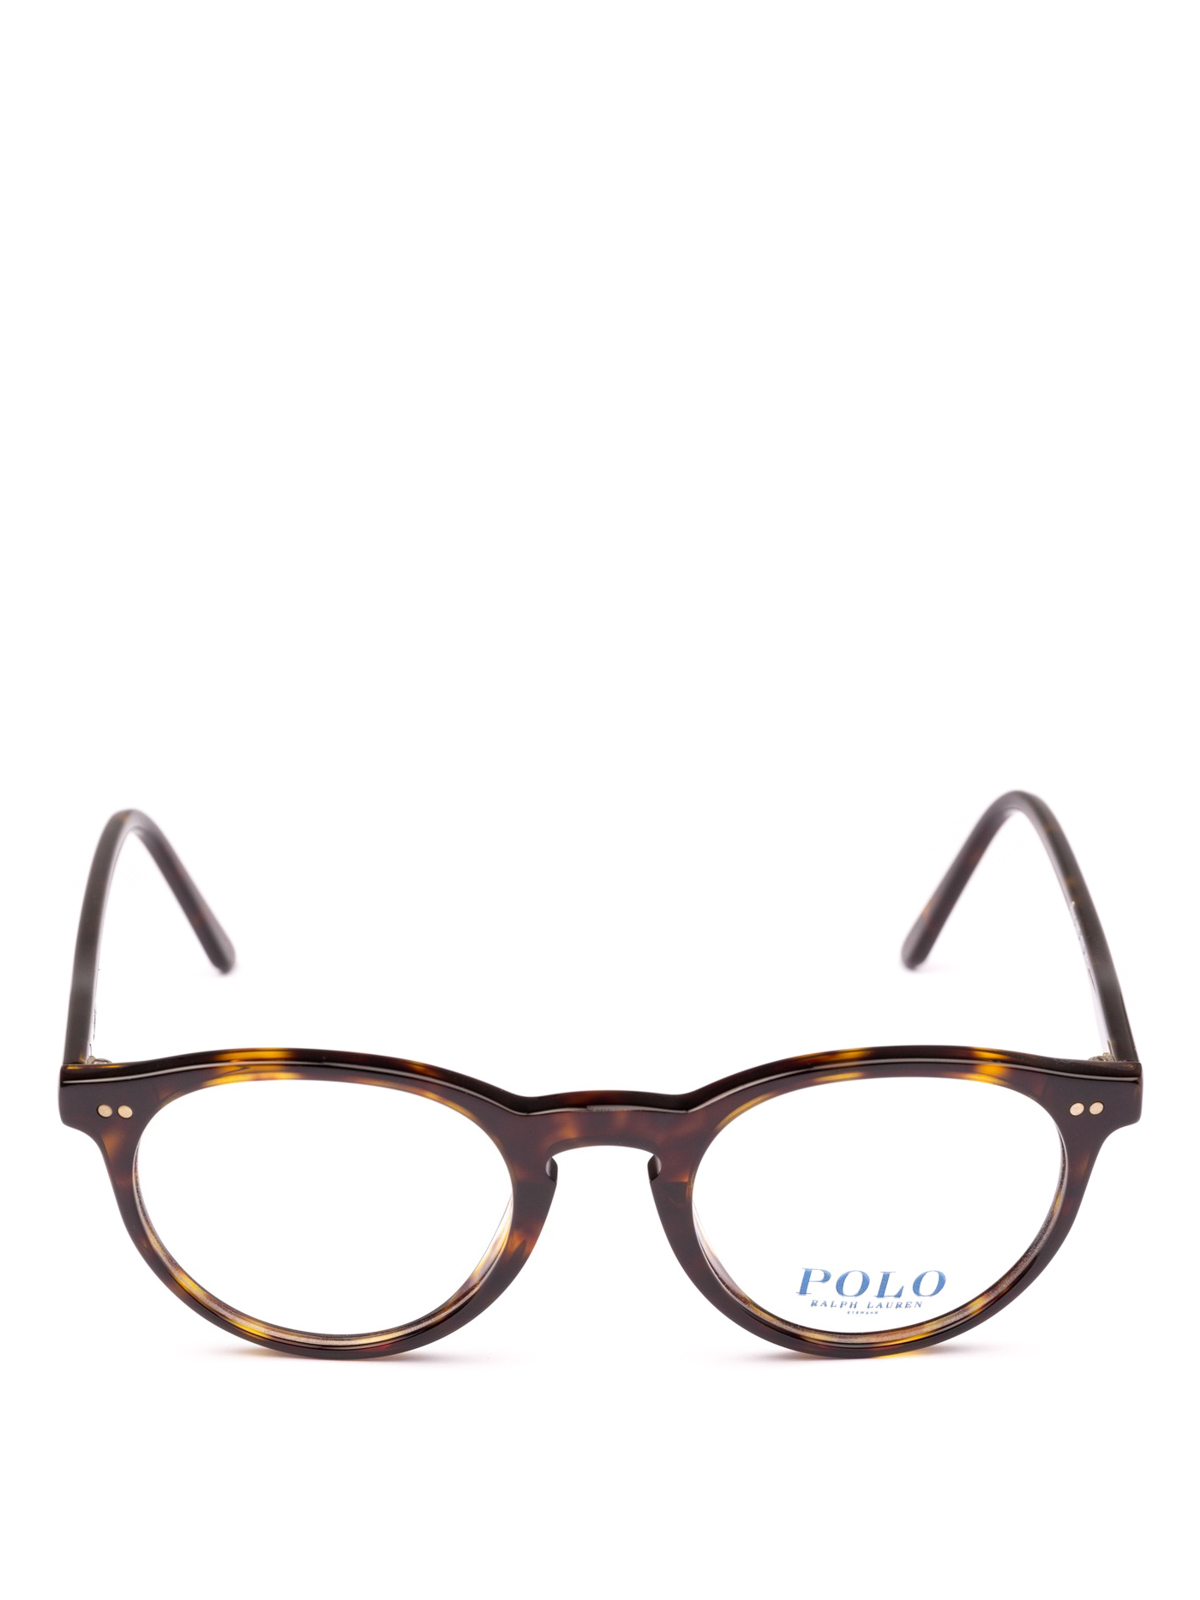 Glasses Polo Ralph Lauren - Tortoiseshell acetate frame round glasses -  POLO20835003